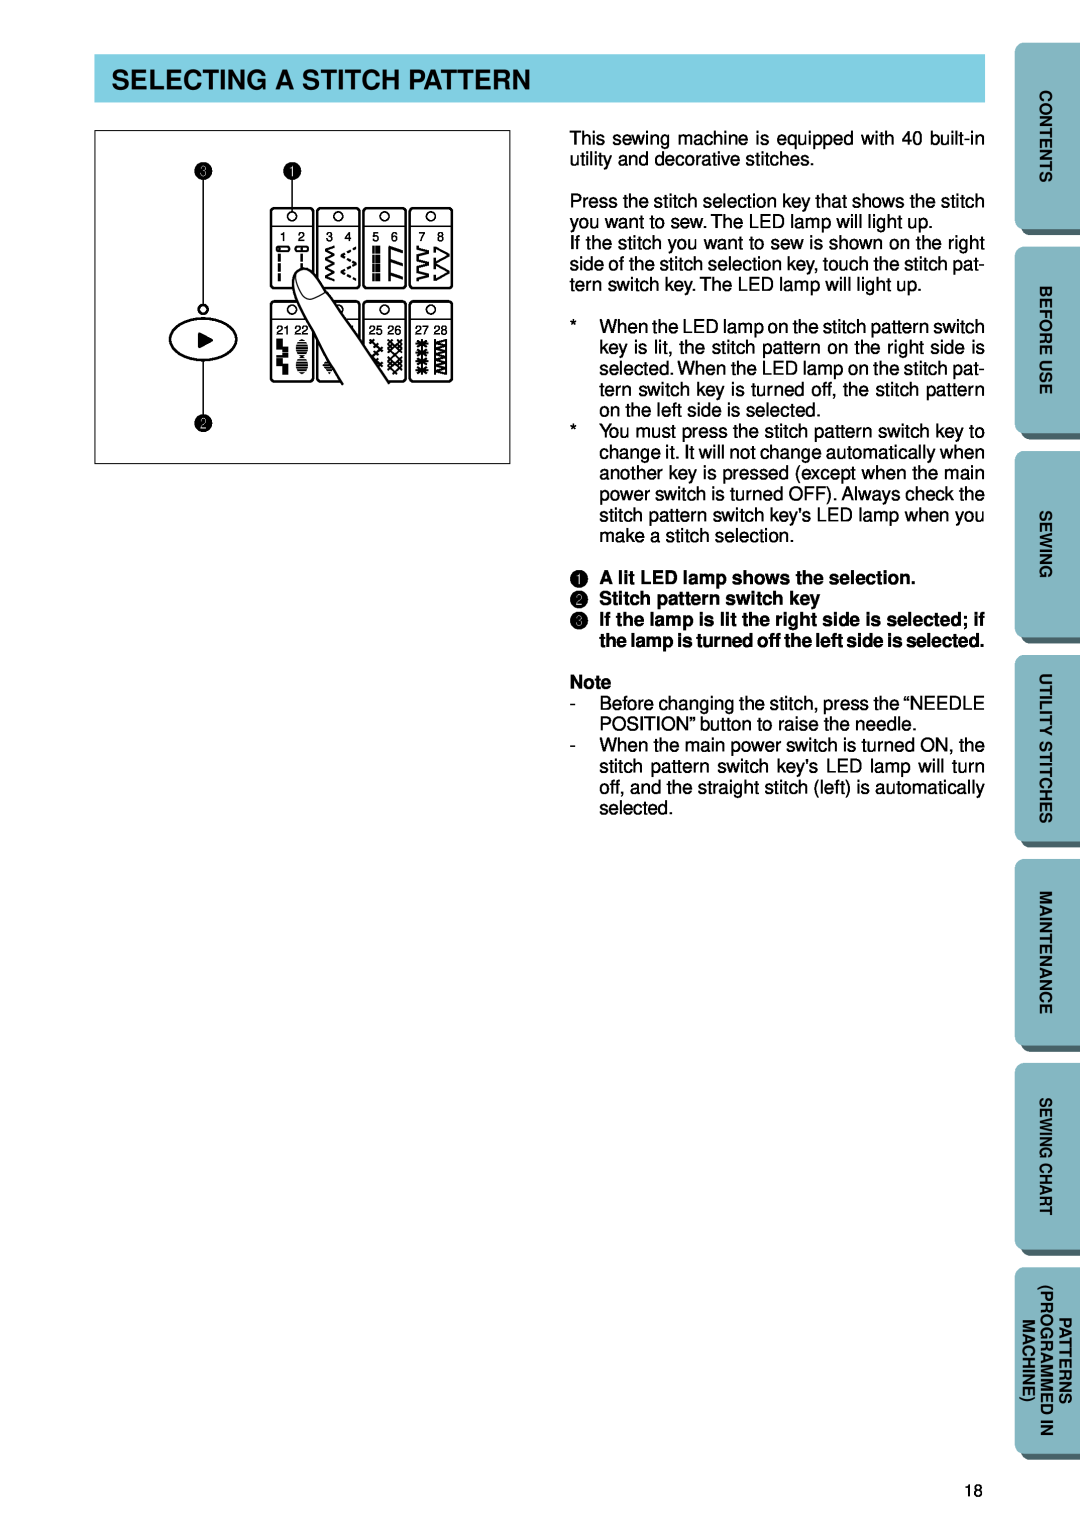 Brother PC-2800 operation manual Selecting A Stitch Pattern, A lit LED lamp shows the selection 2 Stitch pattern switch key 